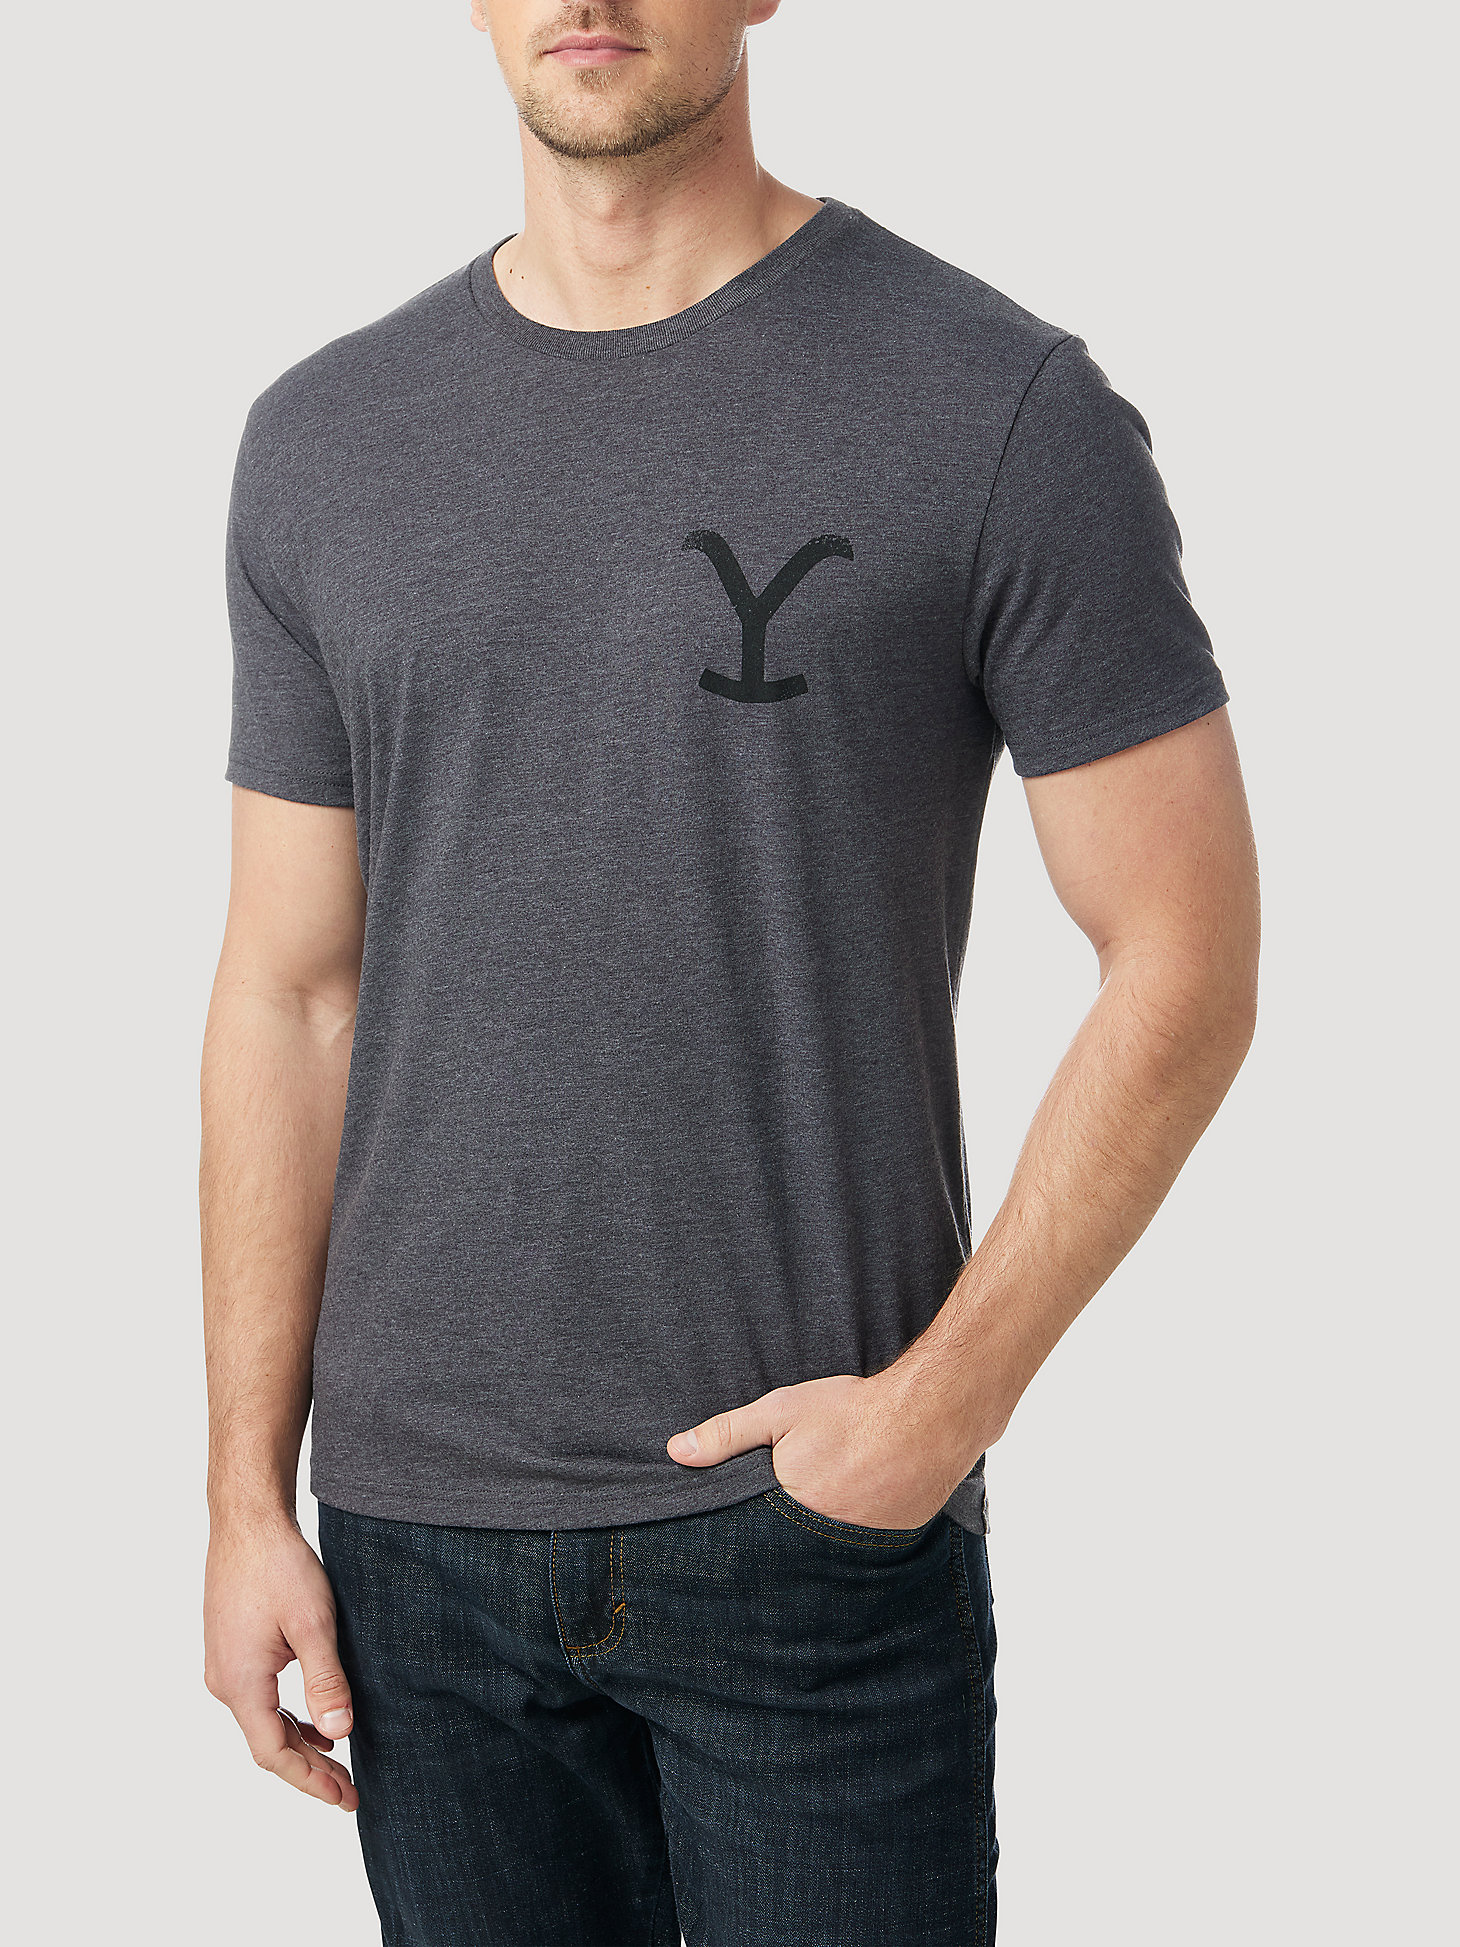 Wrangler x Yellowstone Men's Y Logo T-Shirt in Charcoal Heather alternative view 2